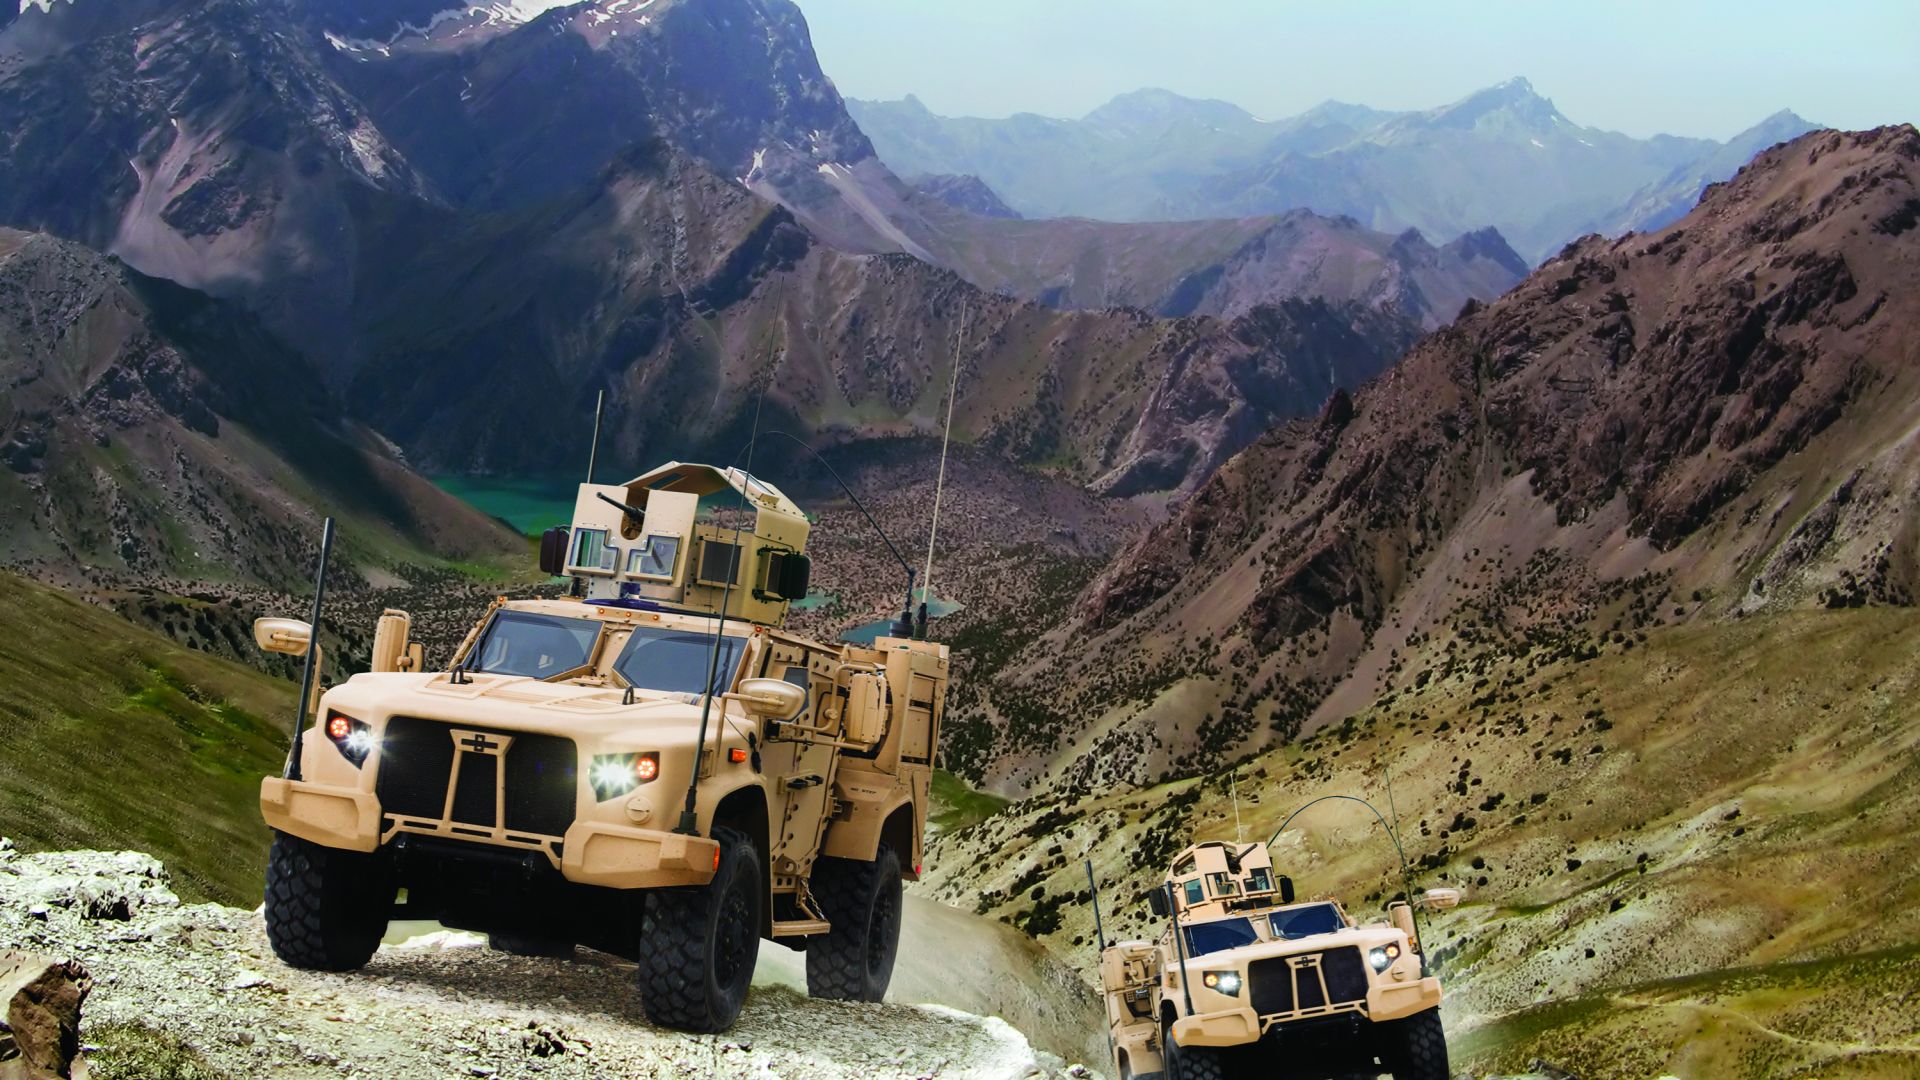 Lockheed Martin's JLTV, автомобиль боевой поддержки, Армия США, Lockheed Martin's JLTV, vehicle, U.S. Army (horizontal)